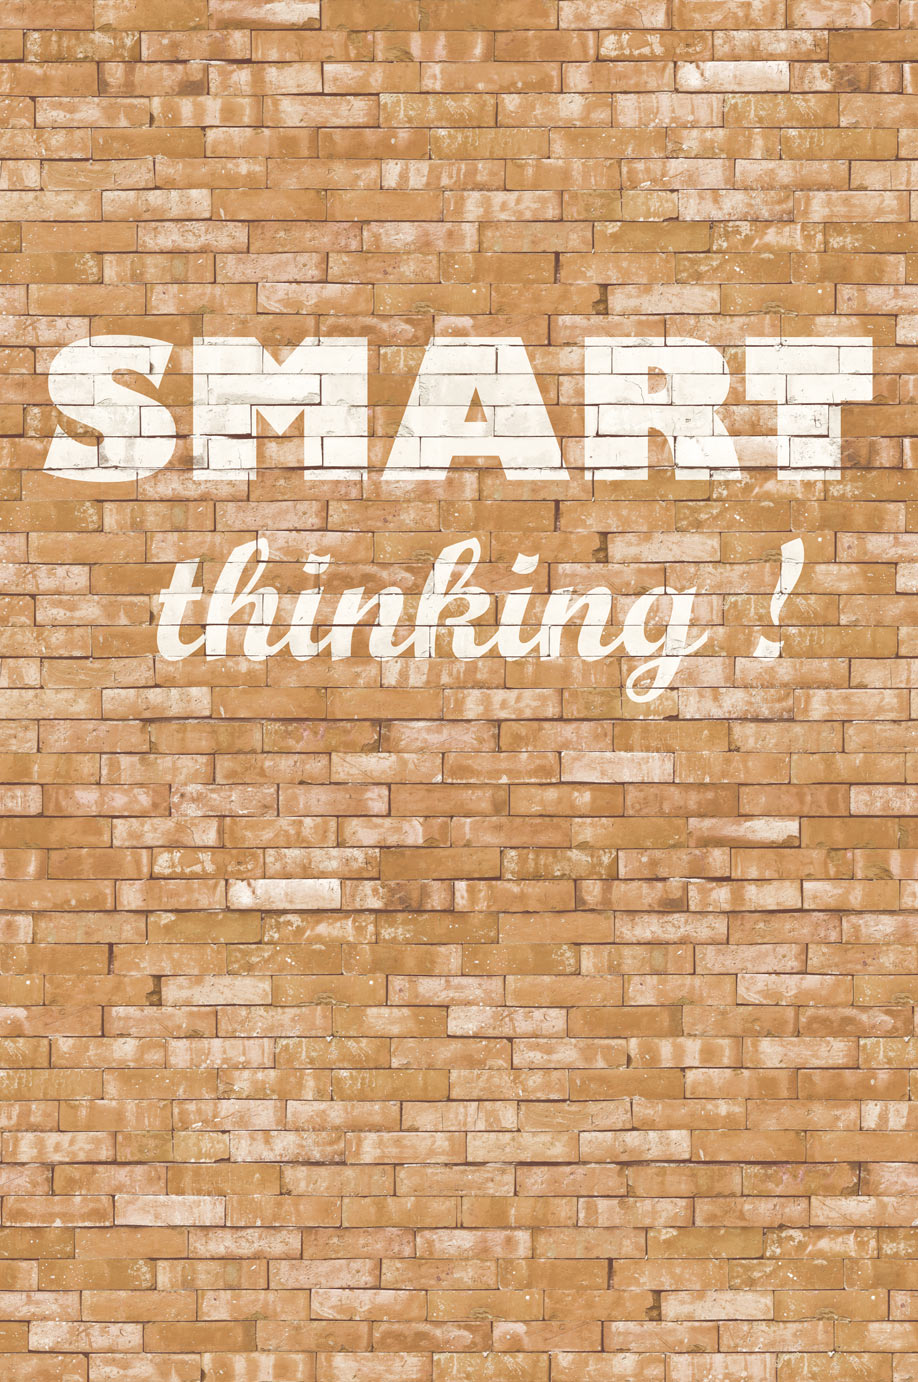 Wallpower Junior 'Smart Thinking' mural